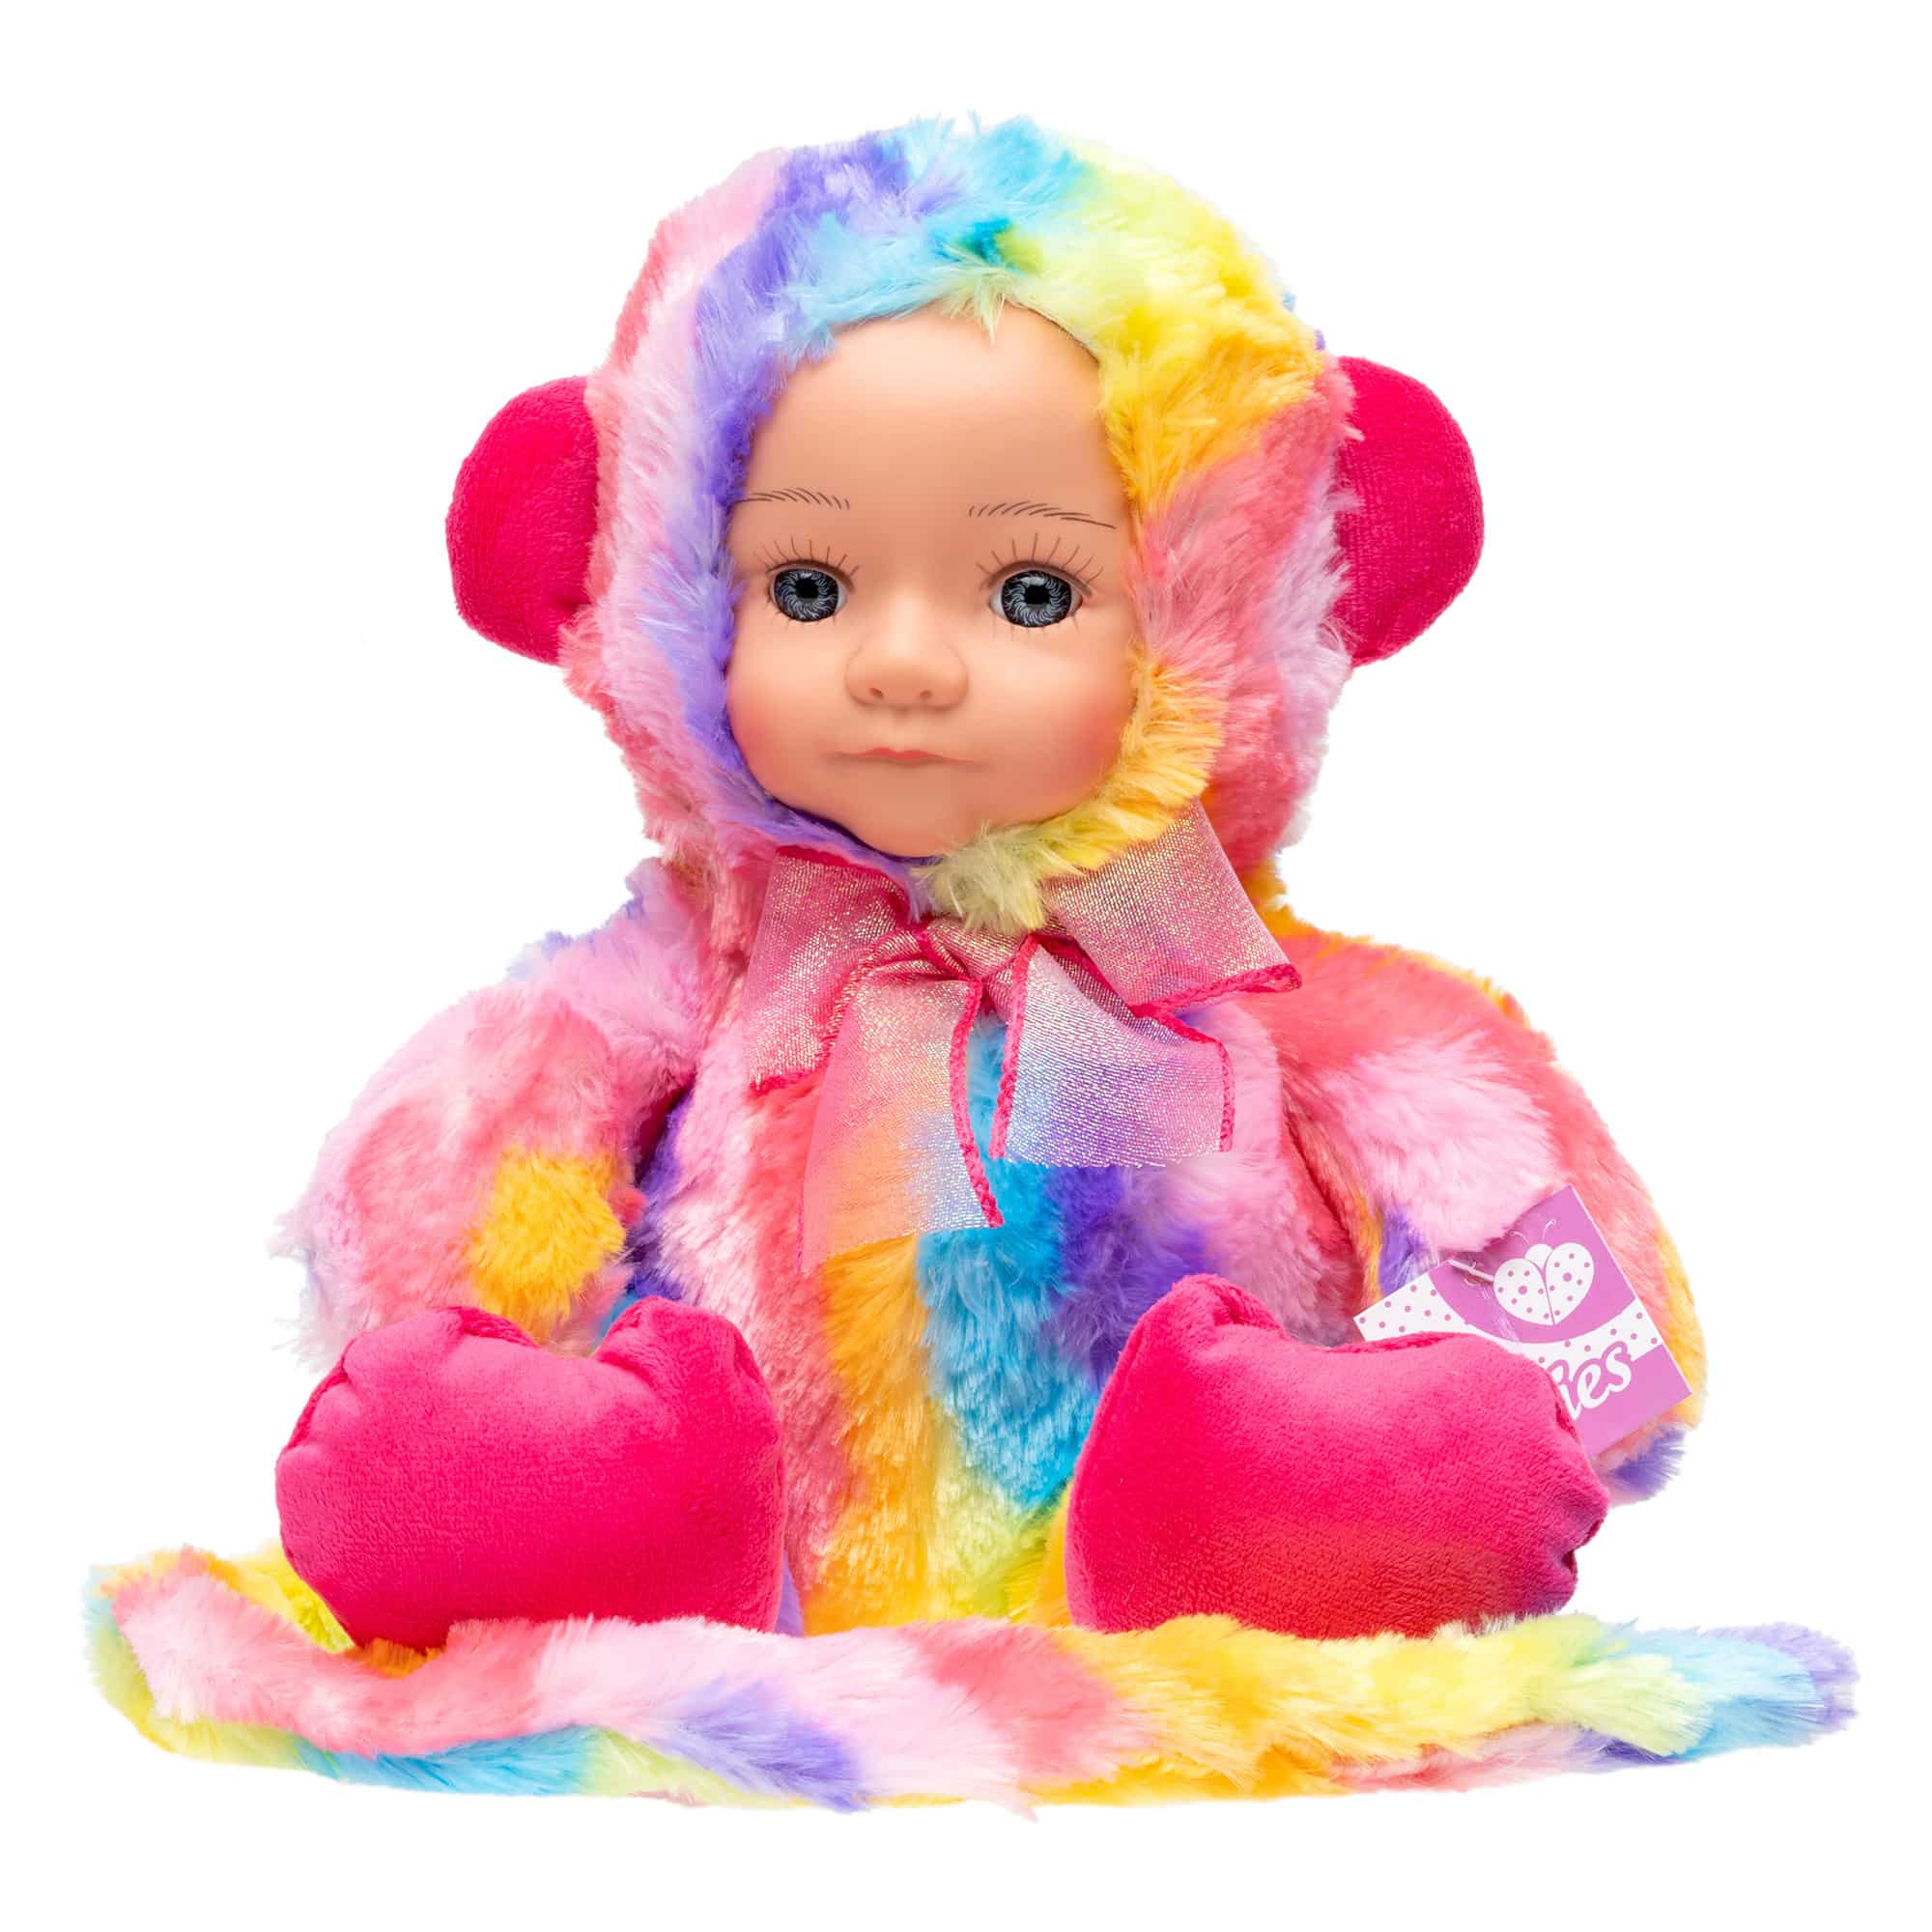 Fur Babies - 24cm Plush Doll - Emily